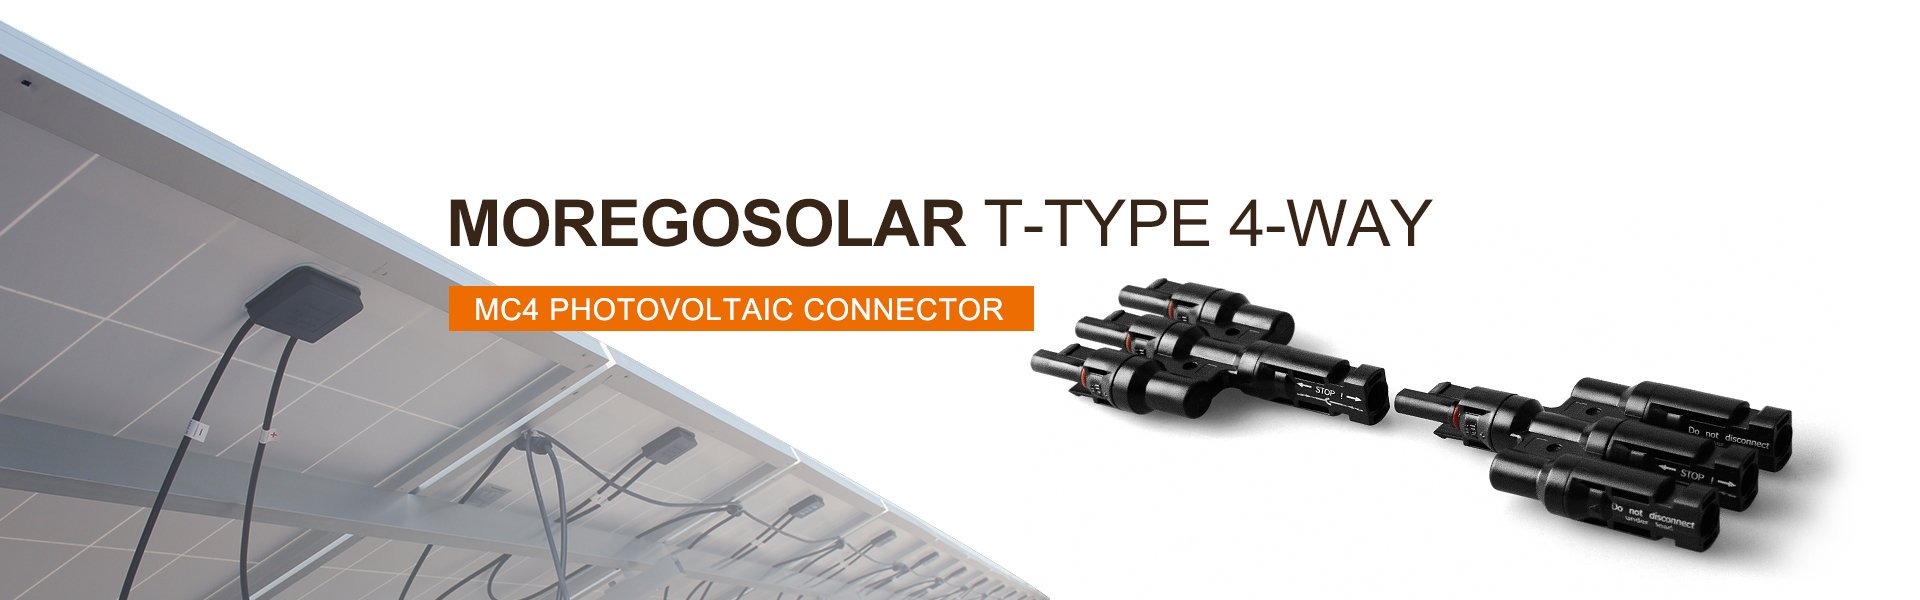 T-type 4-way MC4 photovoltaic connector price